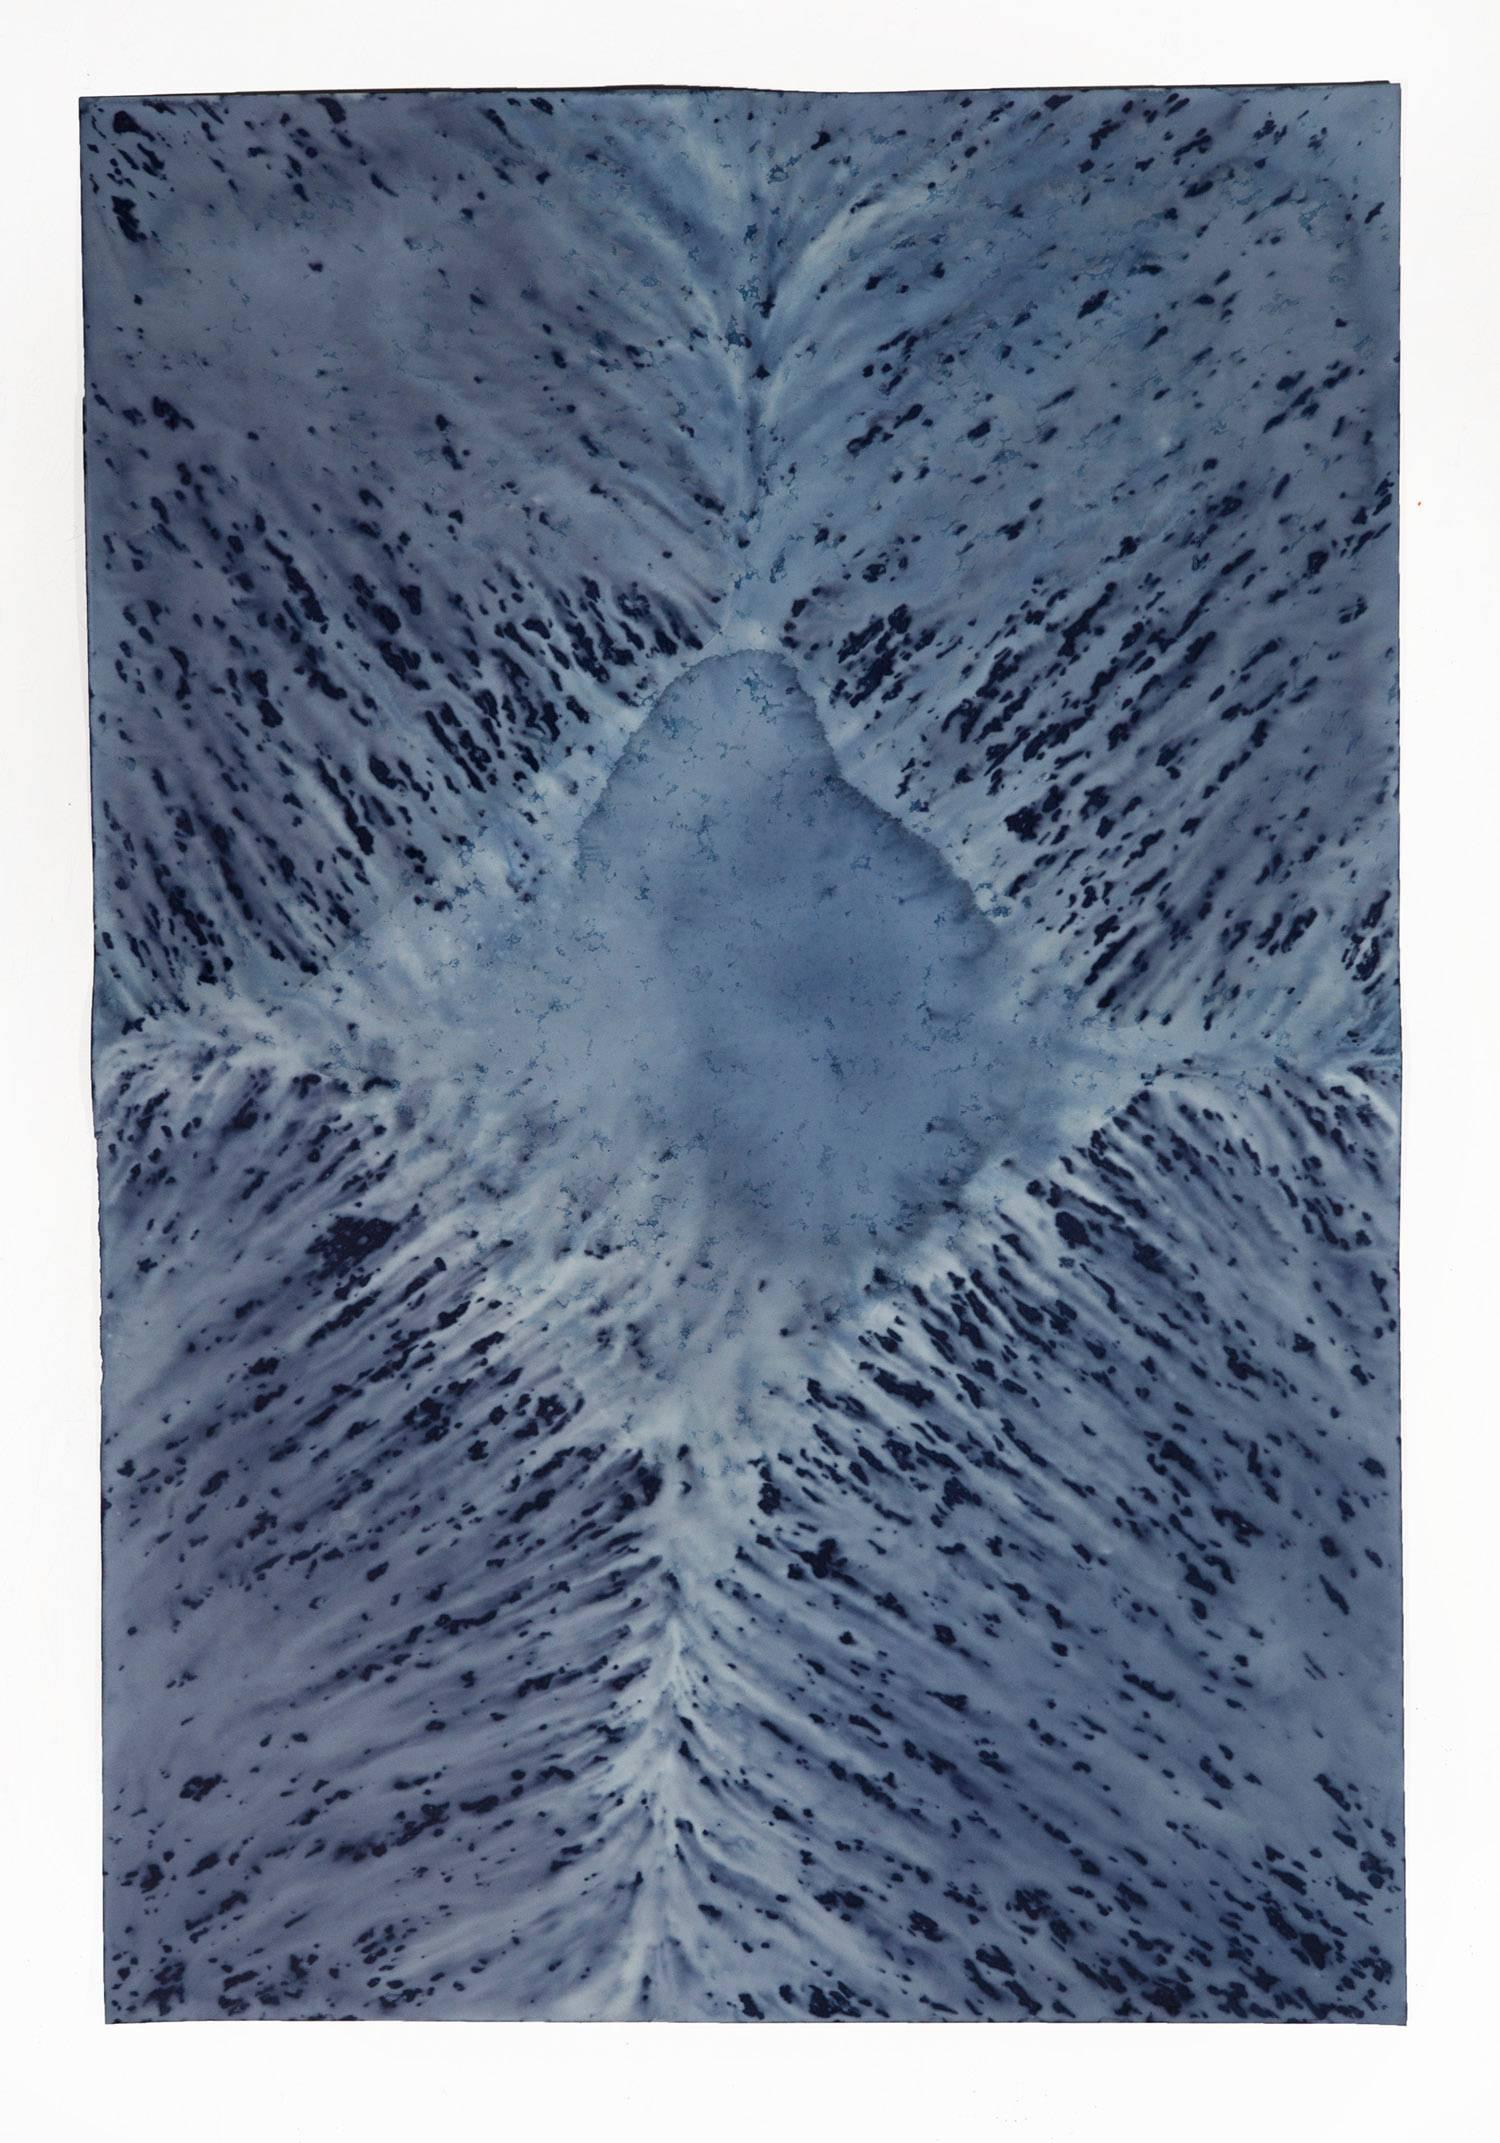 Meghann Riepenhoff Abstract Photograph - Ecotone #18 (Bainbridge Island, WA 08.17.16, Draped with Pooling Precipitation)